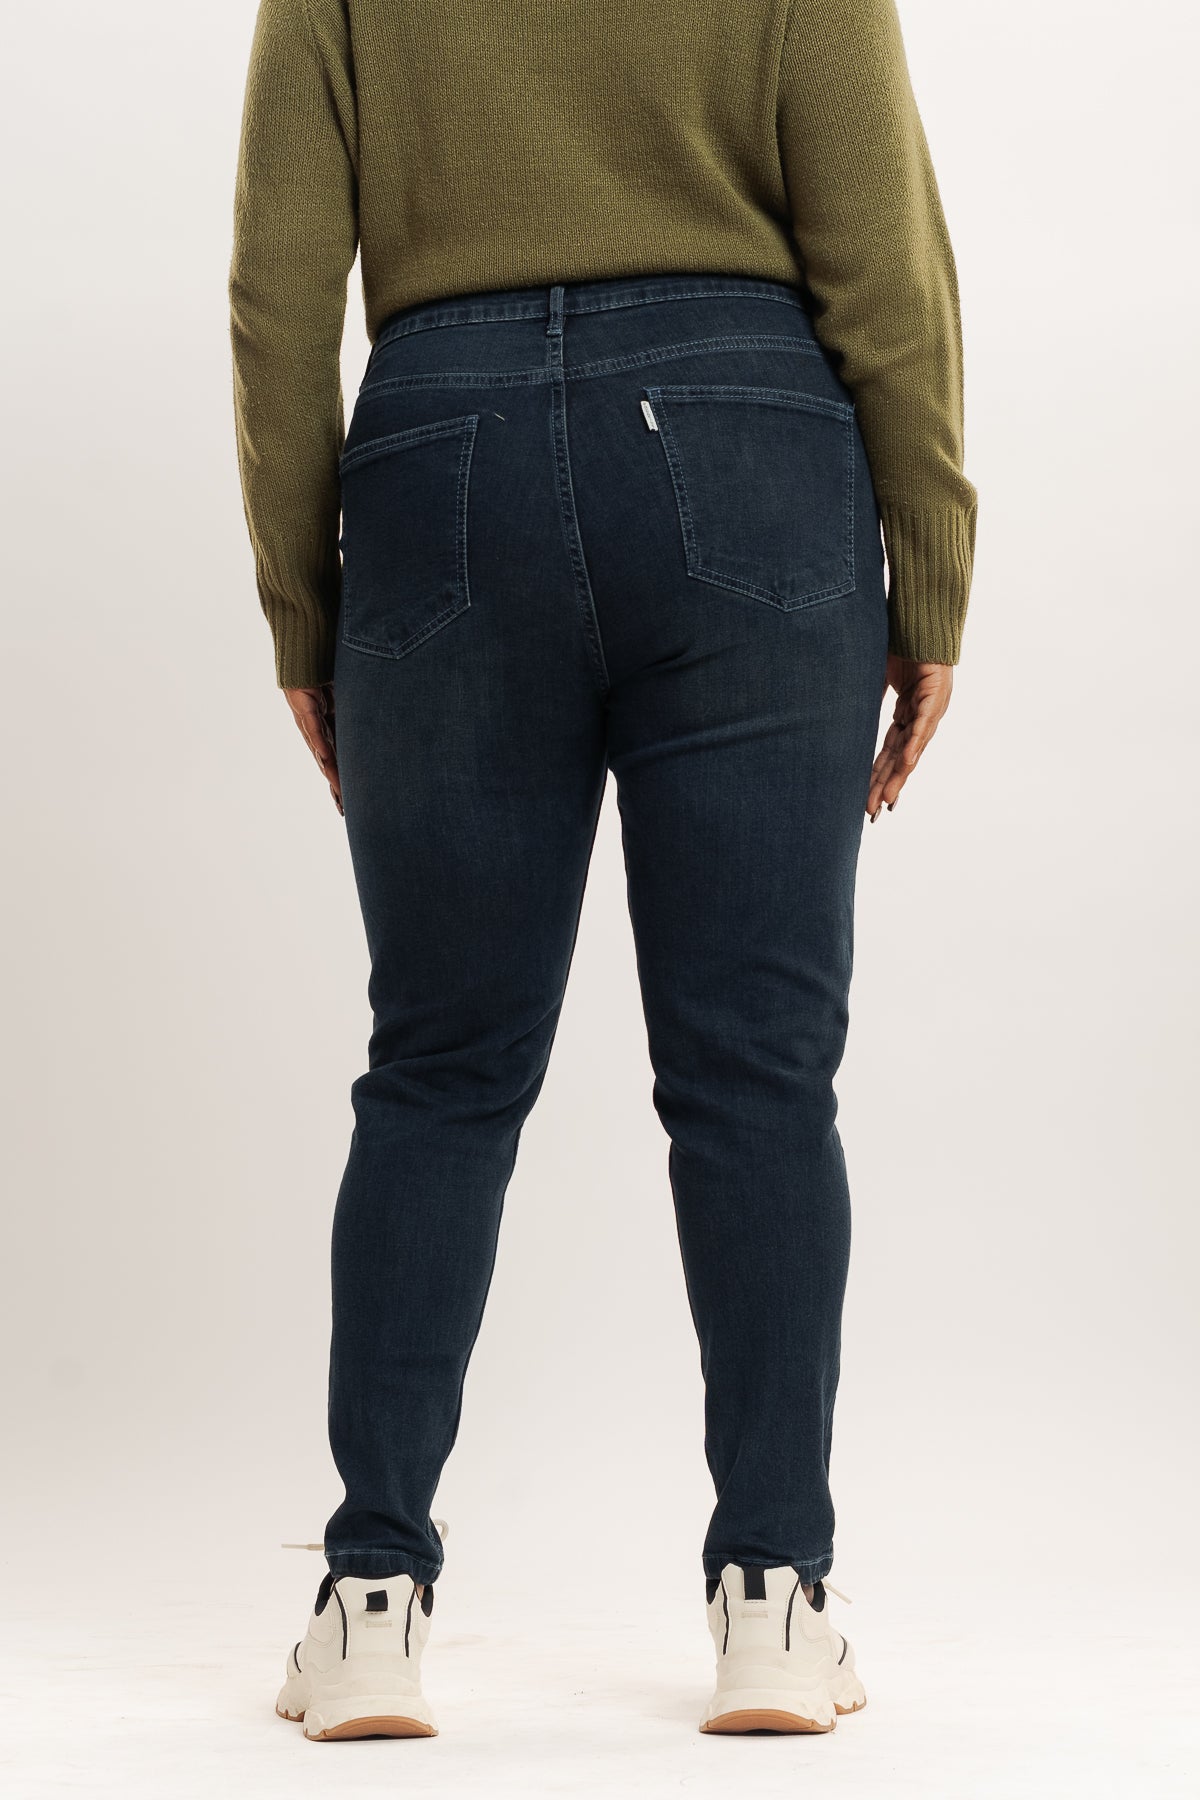 luvamia Womens Ripped Capri Jeans Slim Fit Skinny Stretch Destroyed Denim  Capri Pant for Women Size 2XL Fit Size 20 Size 22